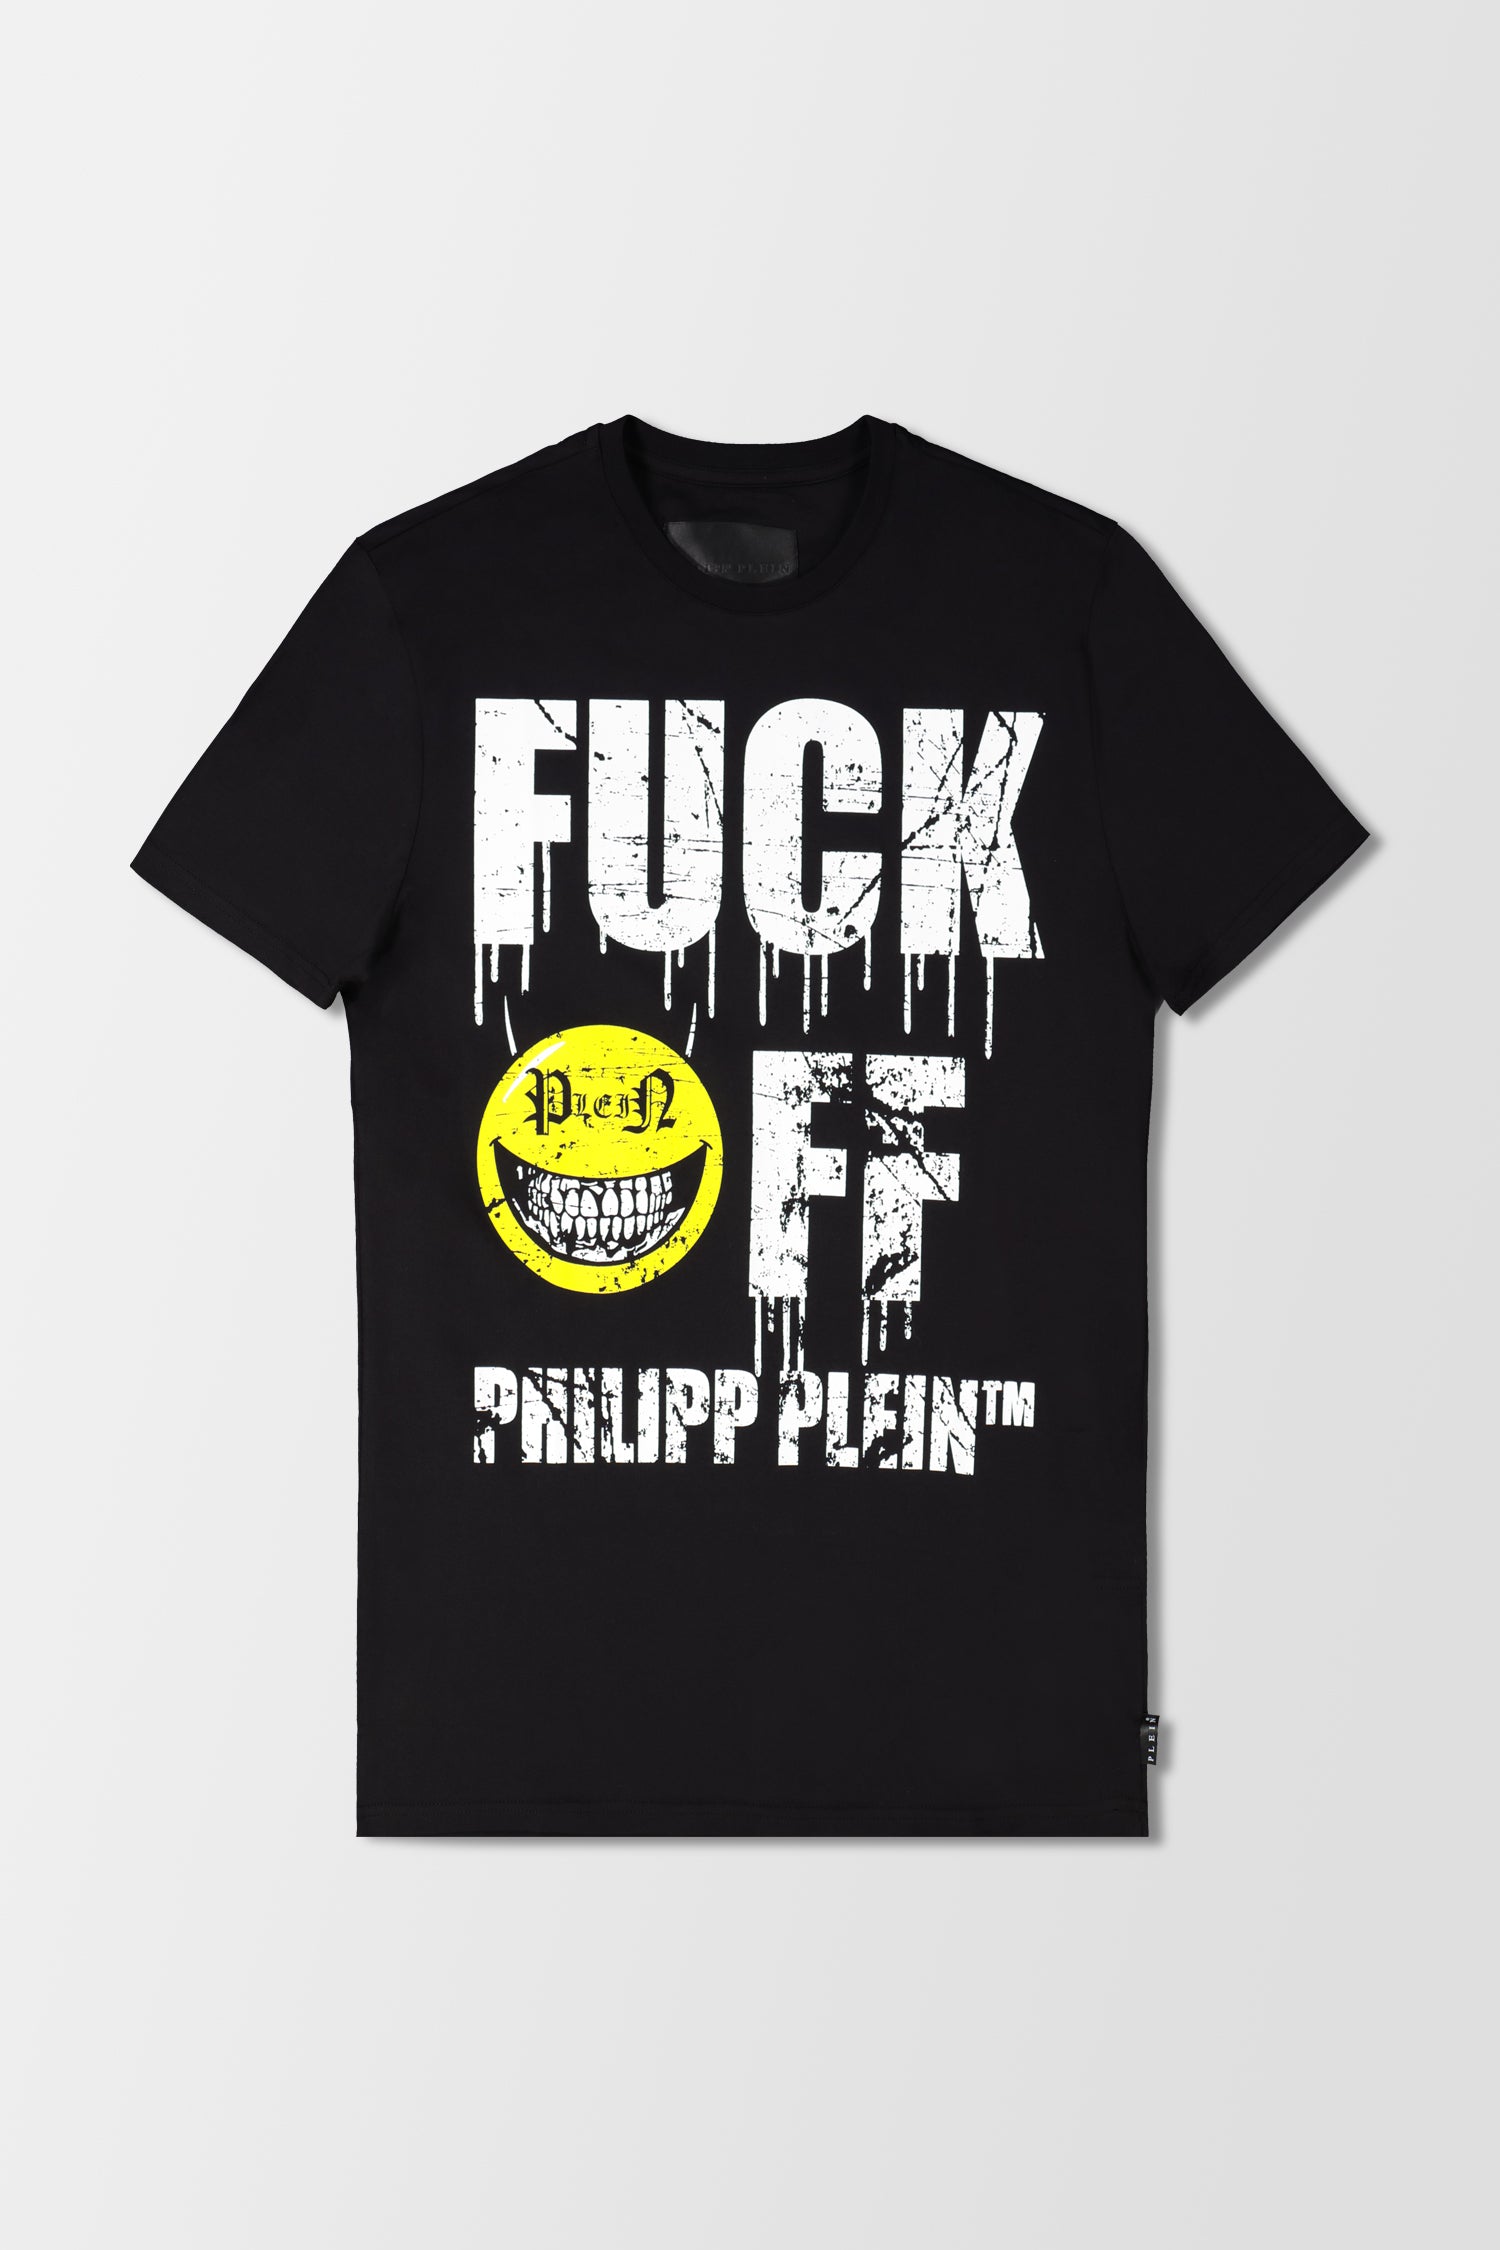 Philipp Plein Black SS Evil Smile Round Neck T-Shirt